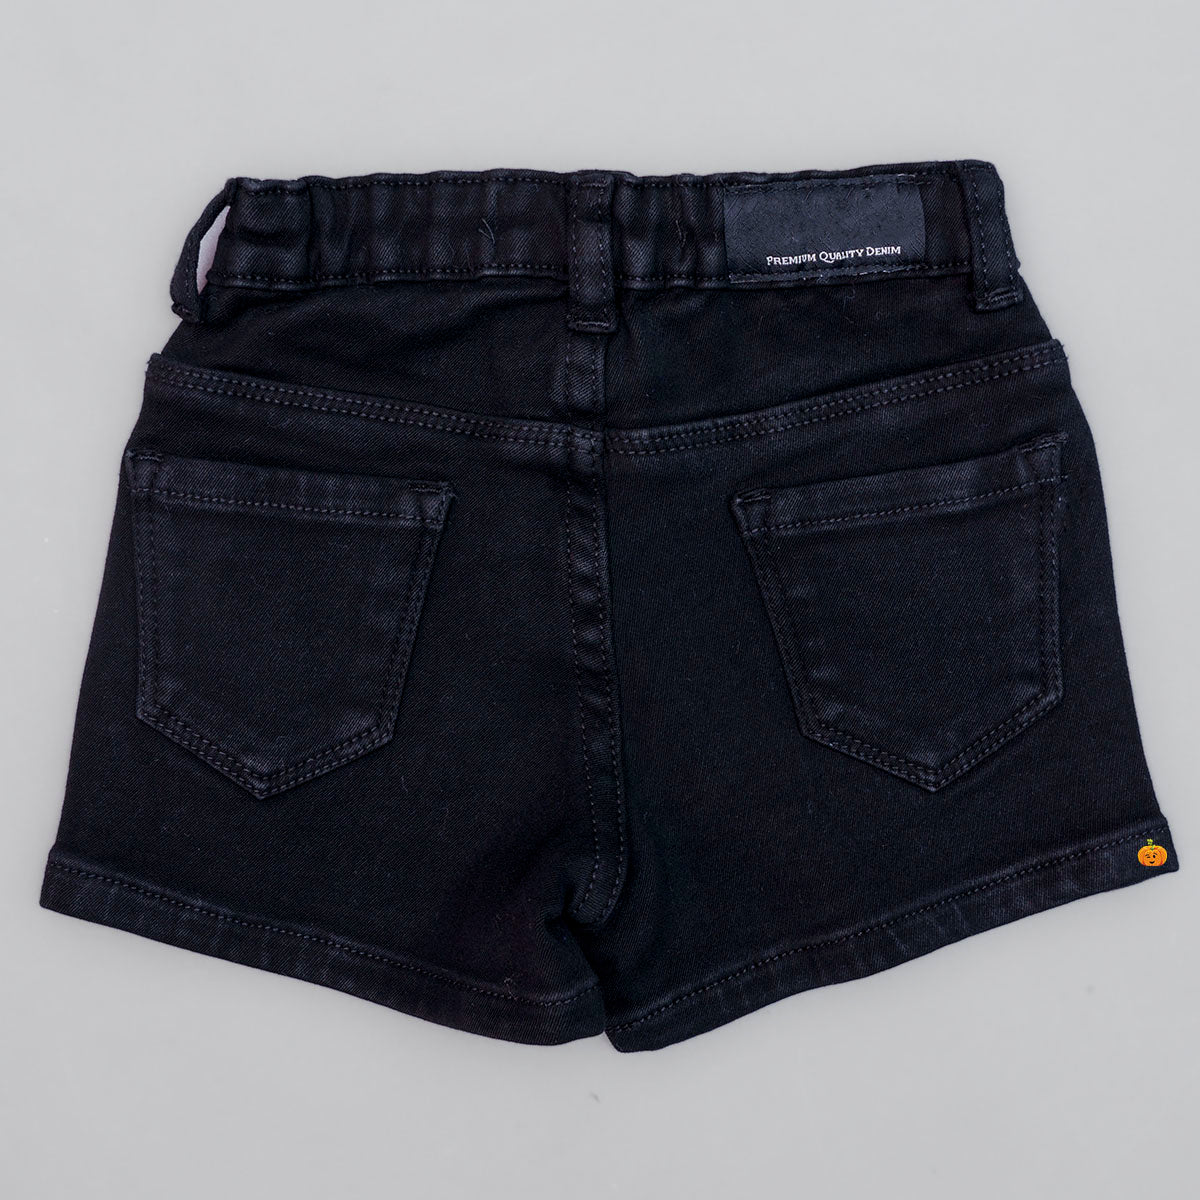 Buy SweatyRocks Women's High Waist Denim Shorts Straight Leg Raw Hem Jean  Shorts Summer Hot Pants with Pockets, Black, Small at Amazon.in